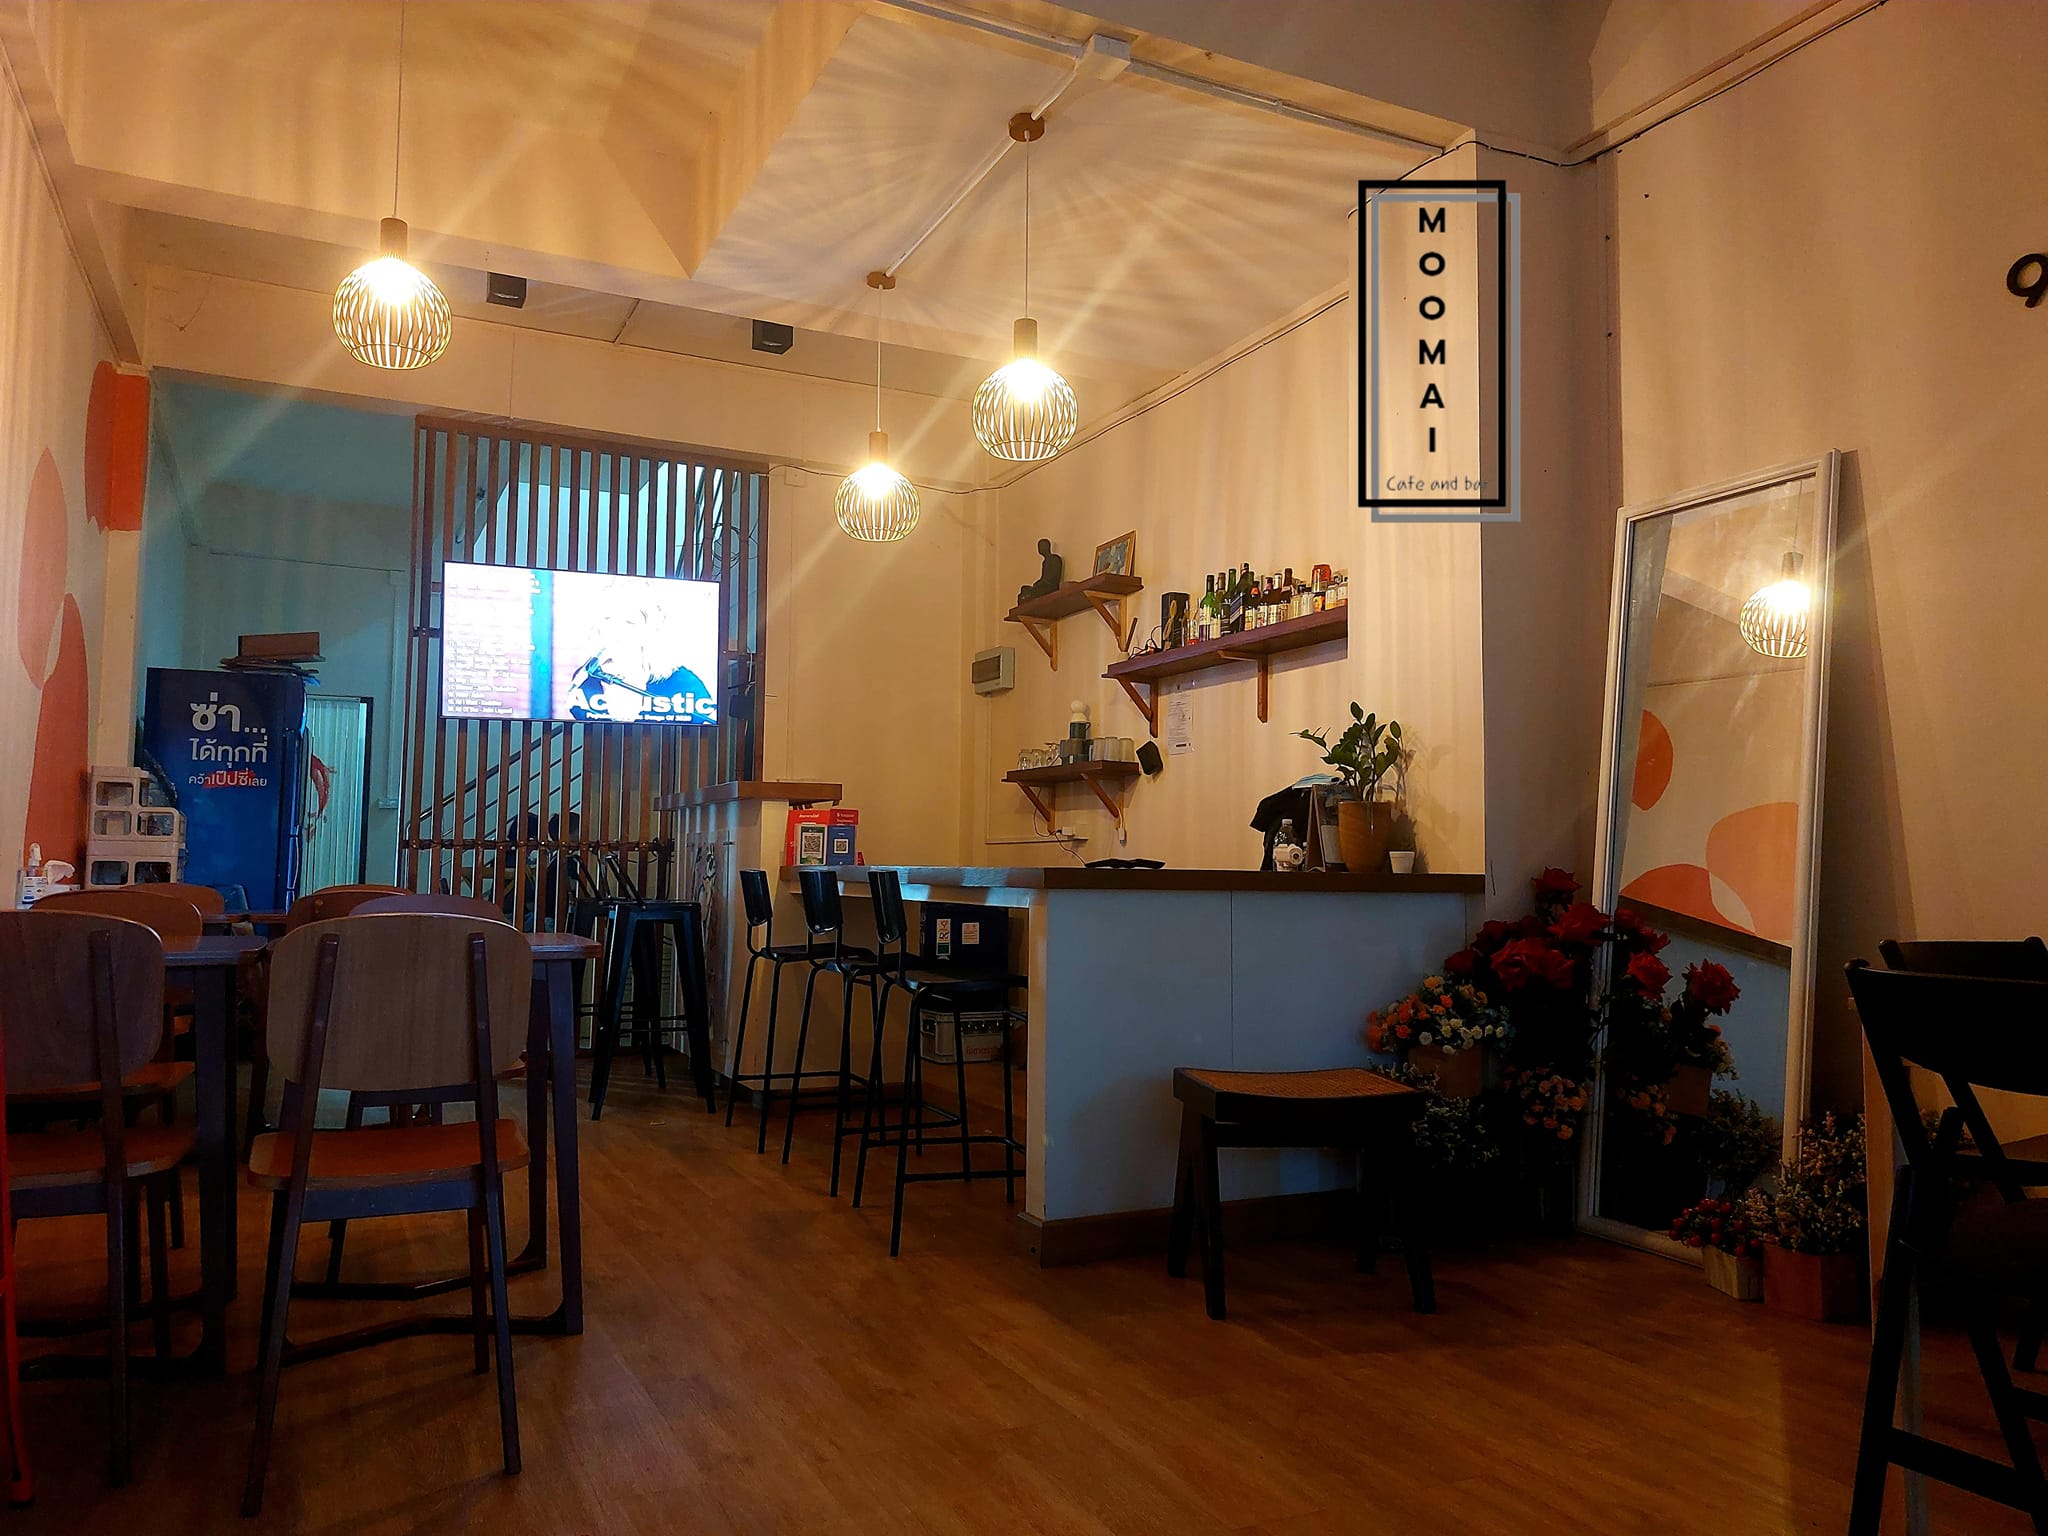 Moomai Cafe & Bar (Moomai Cafe & Bar) : นครราชสีมา (Nakhon Ratchasima)